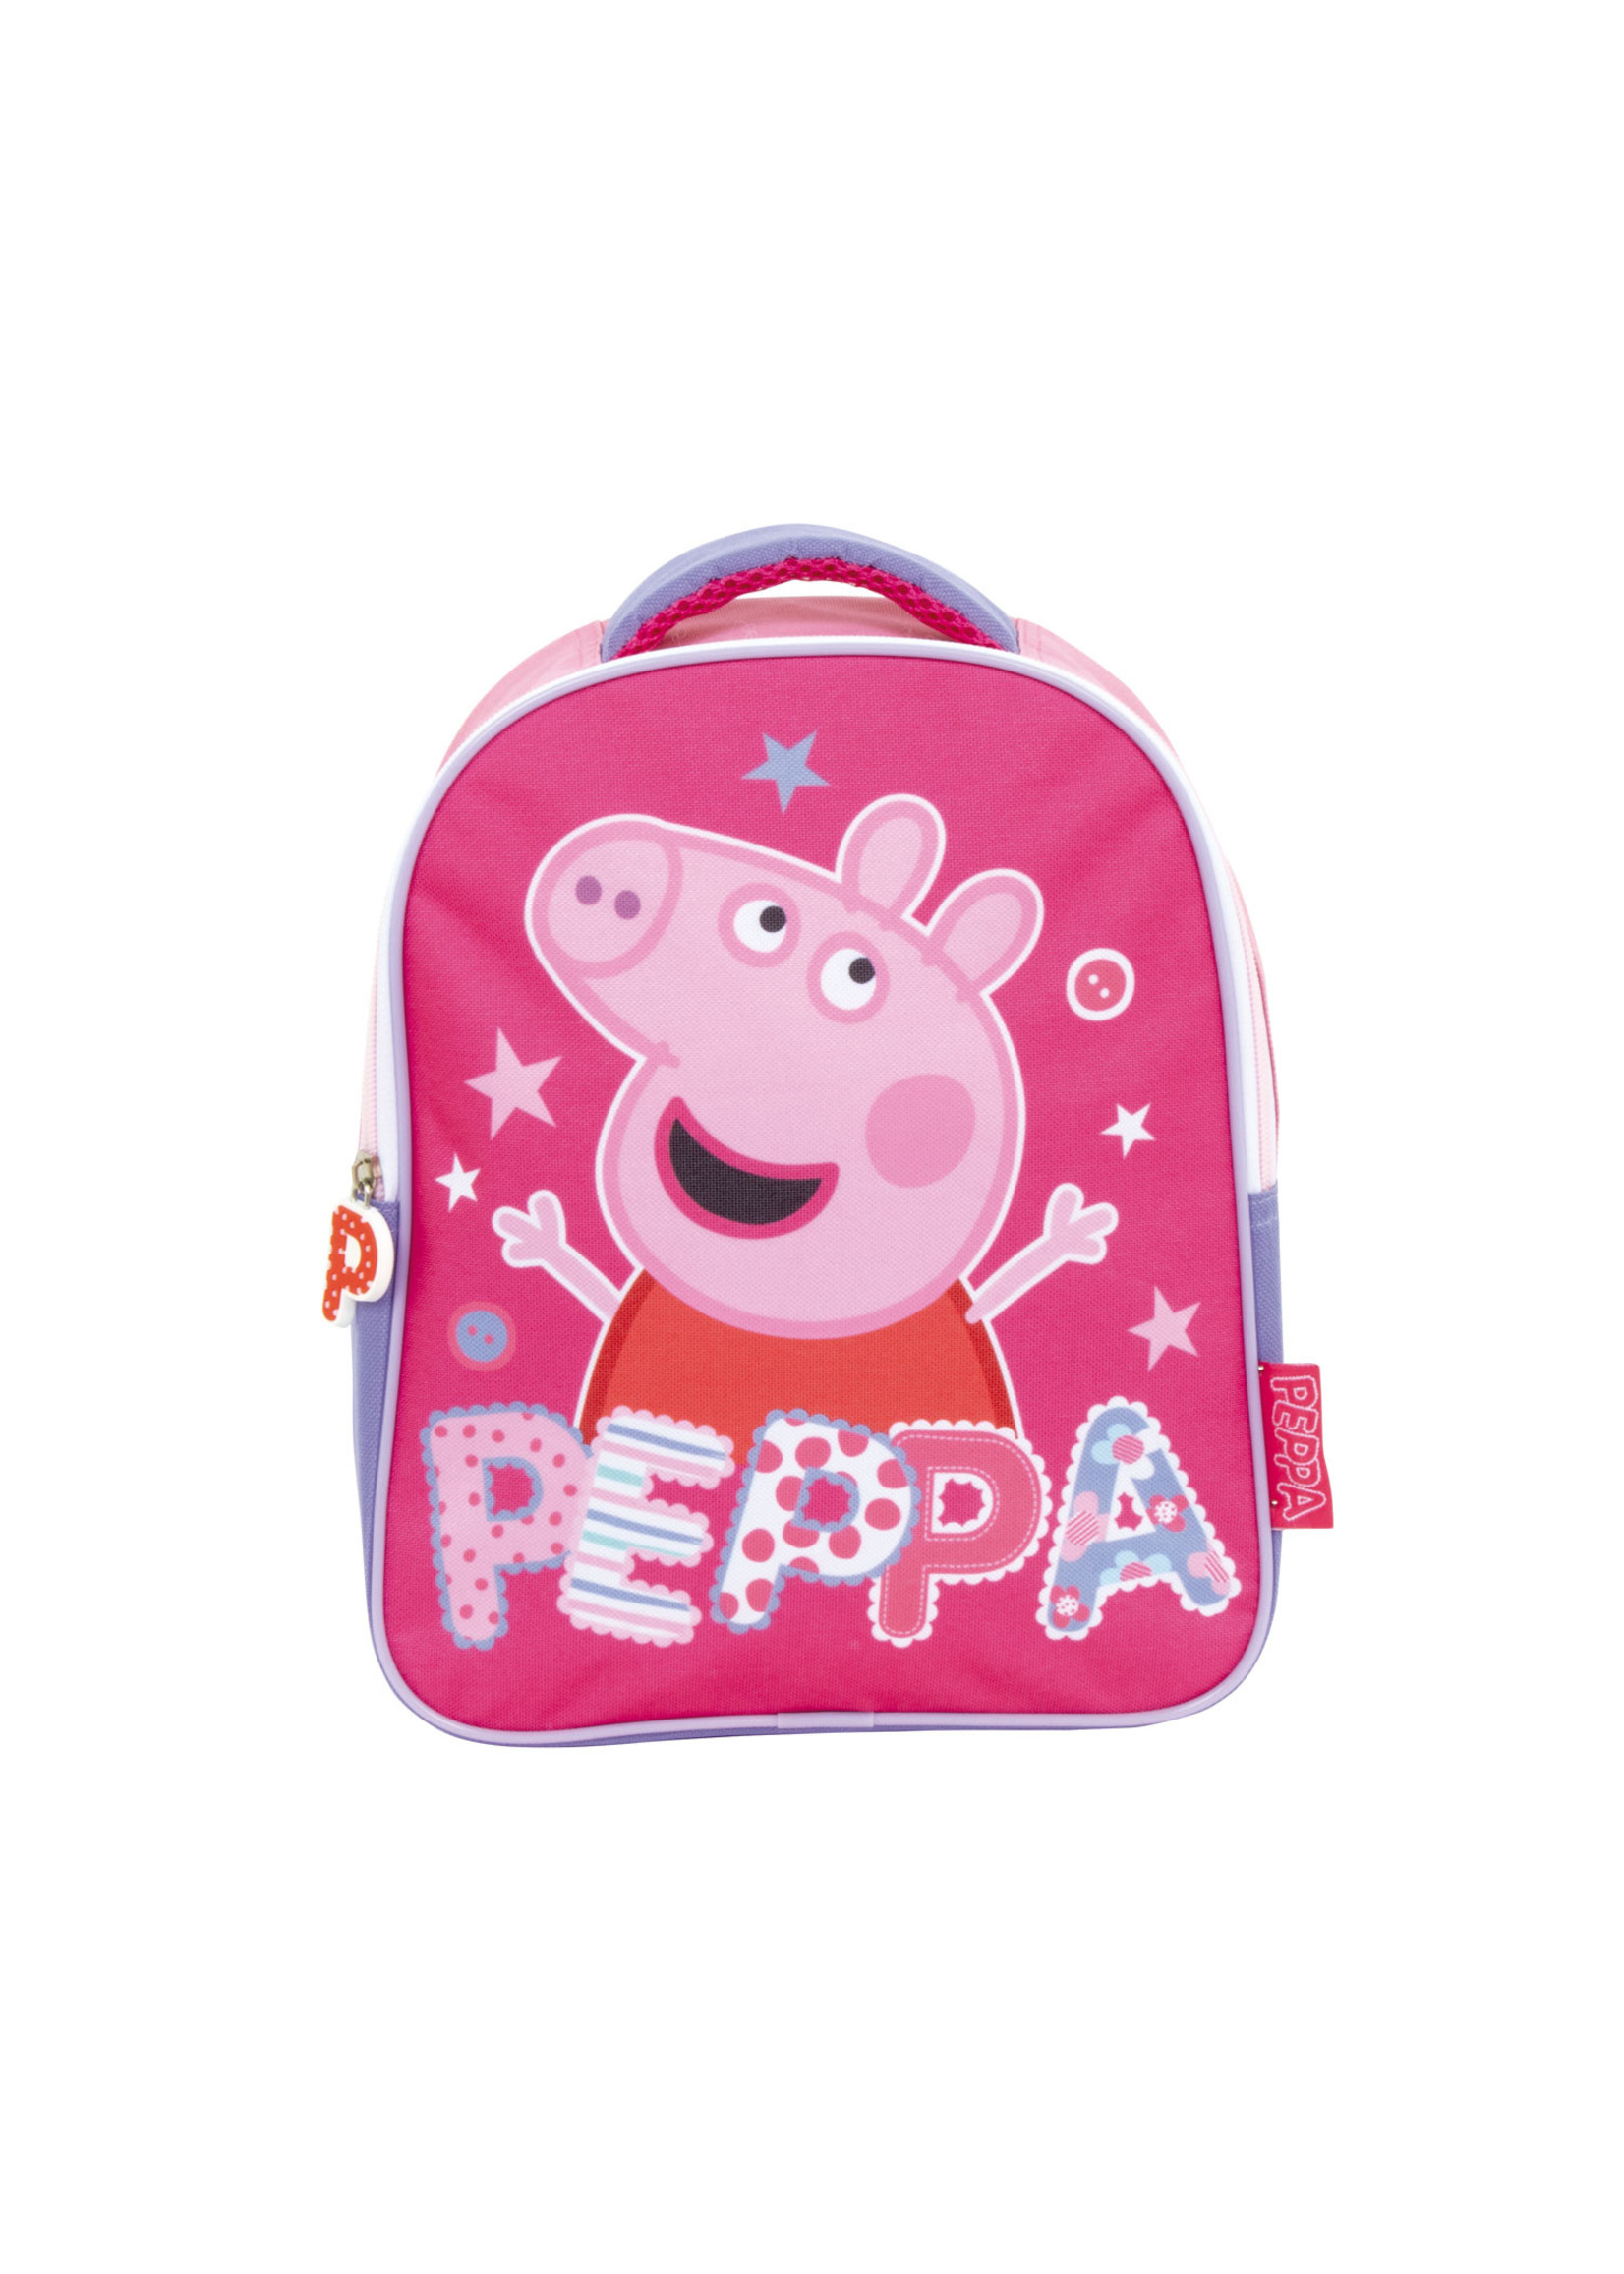 Peppa Pig  Plecak Peppa Pig od Peppa Pig w kolorze różowym